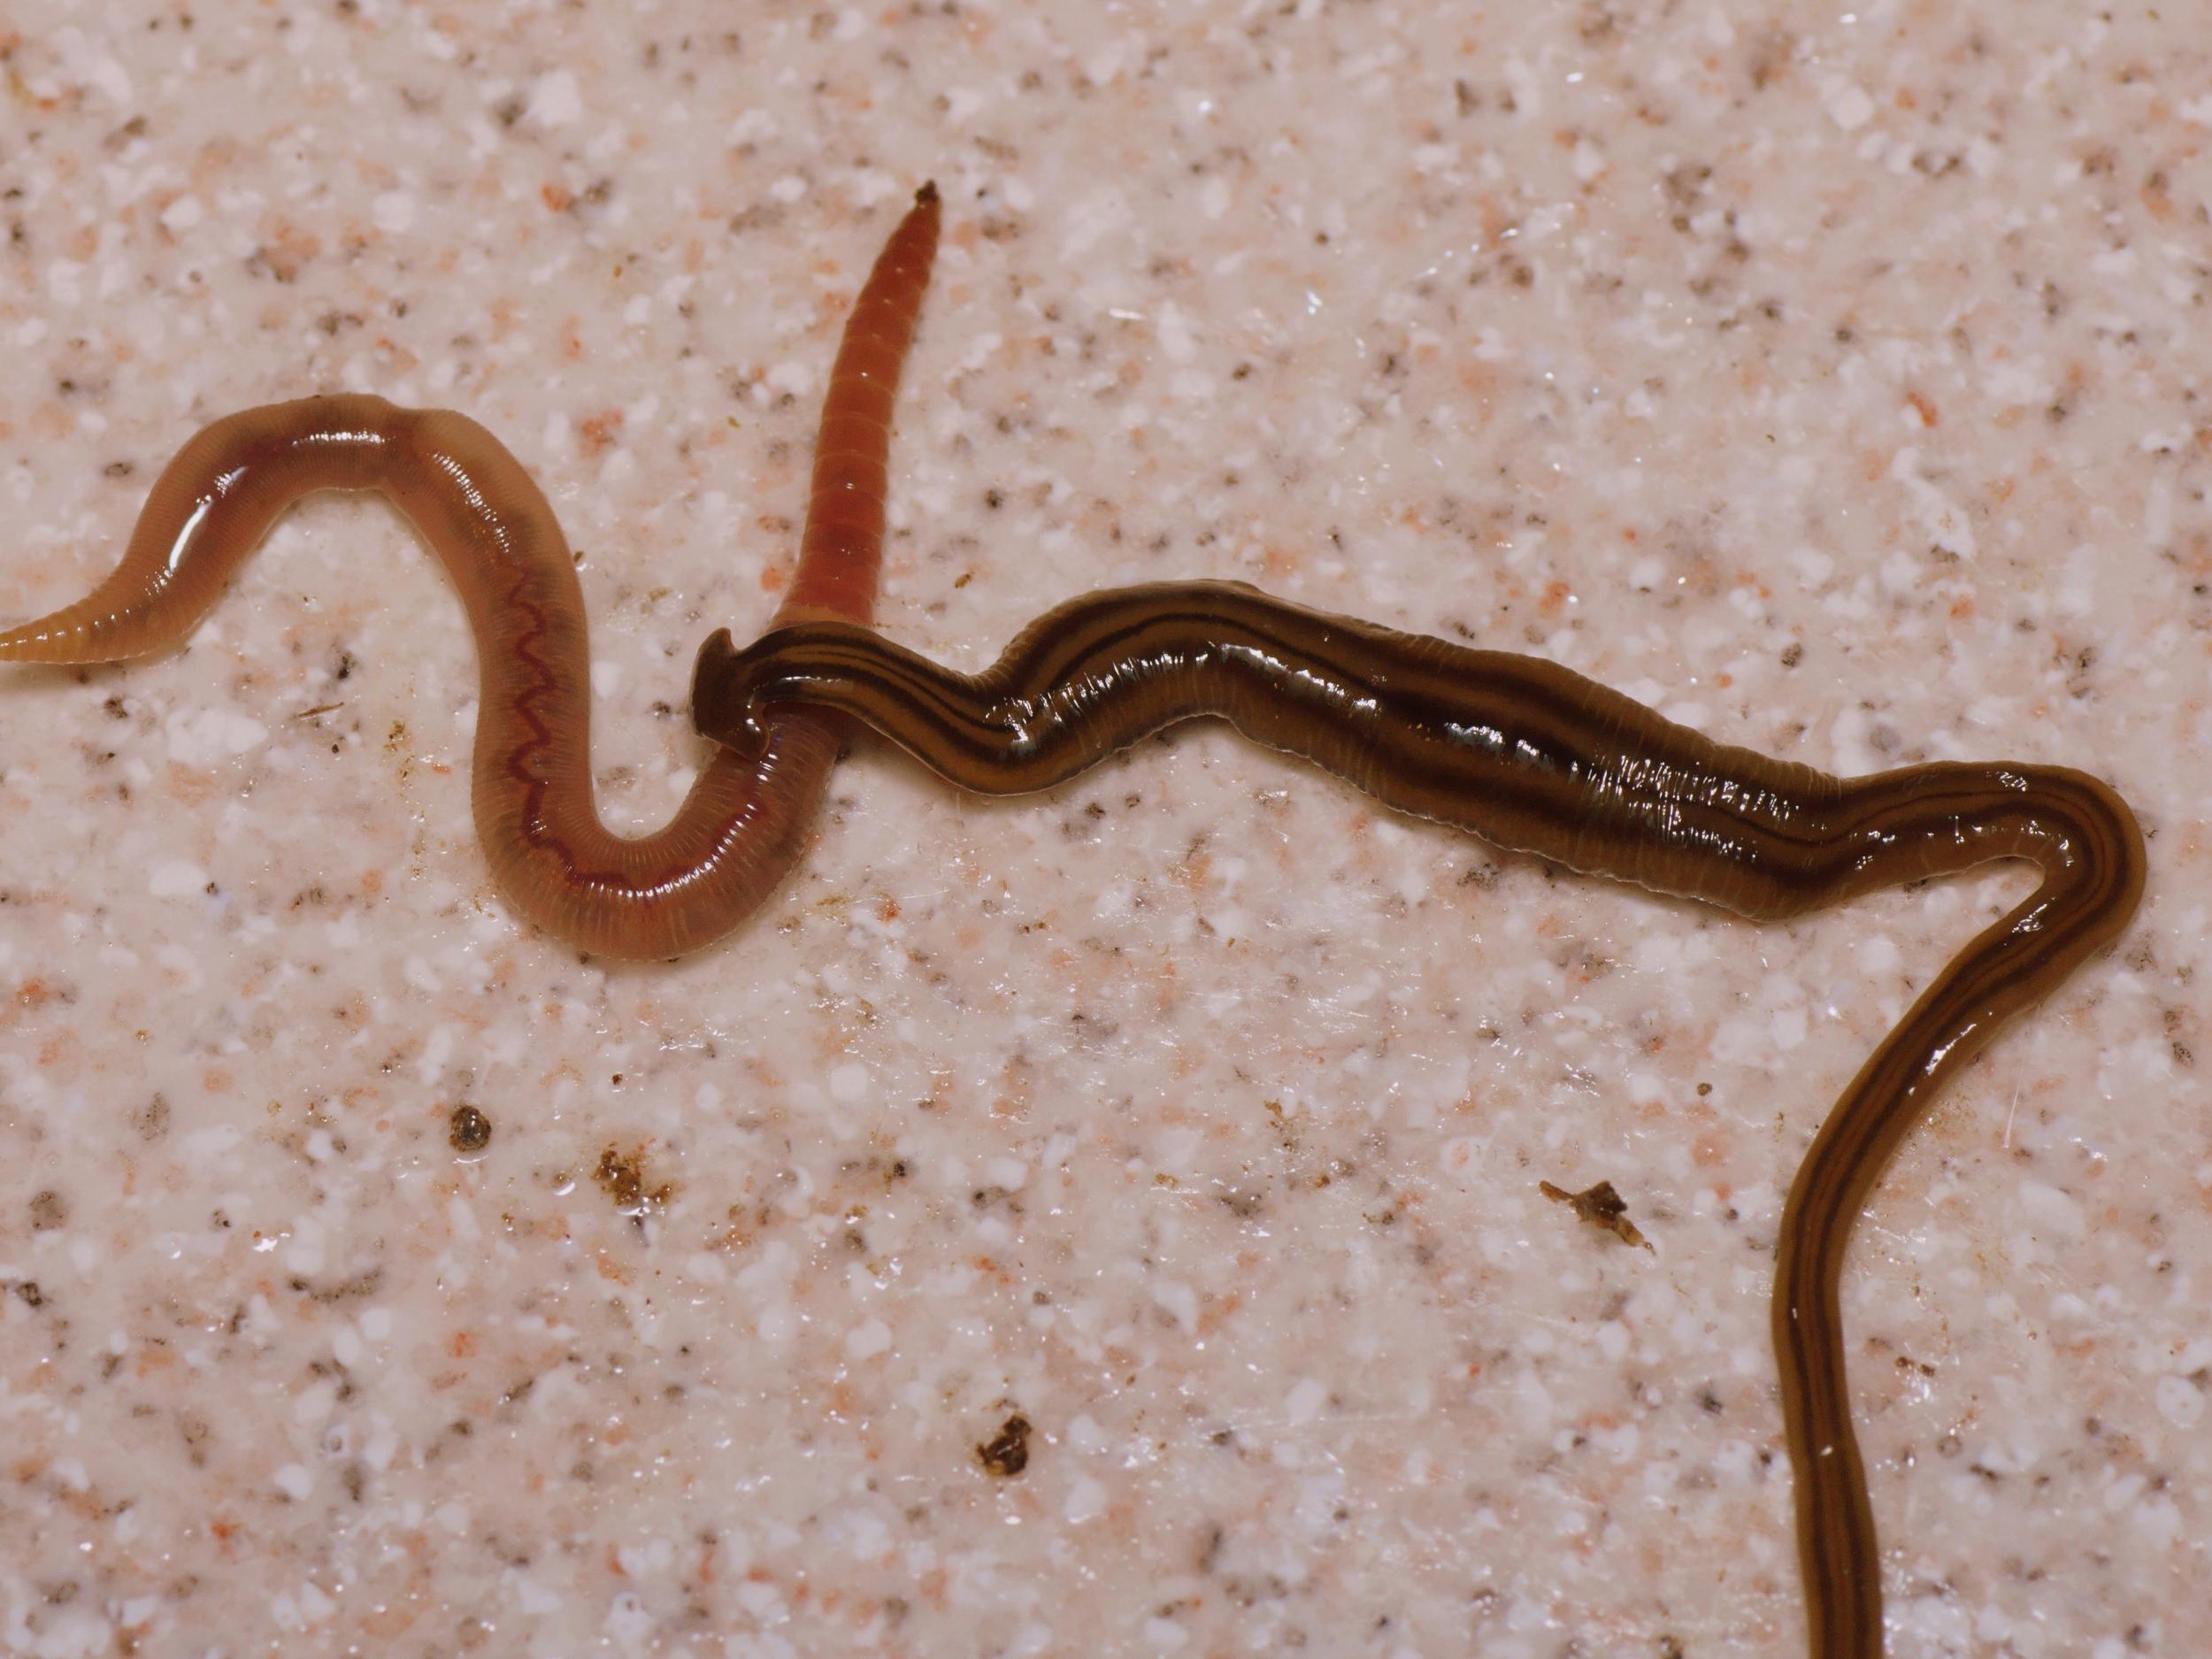 Bipalium kewense killing an earthworm